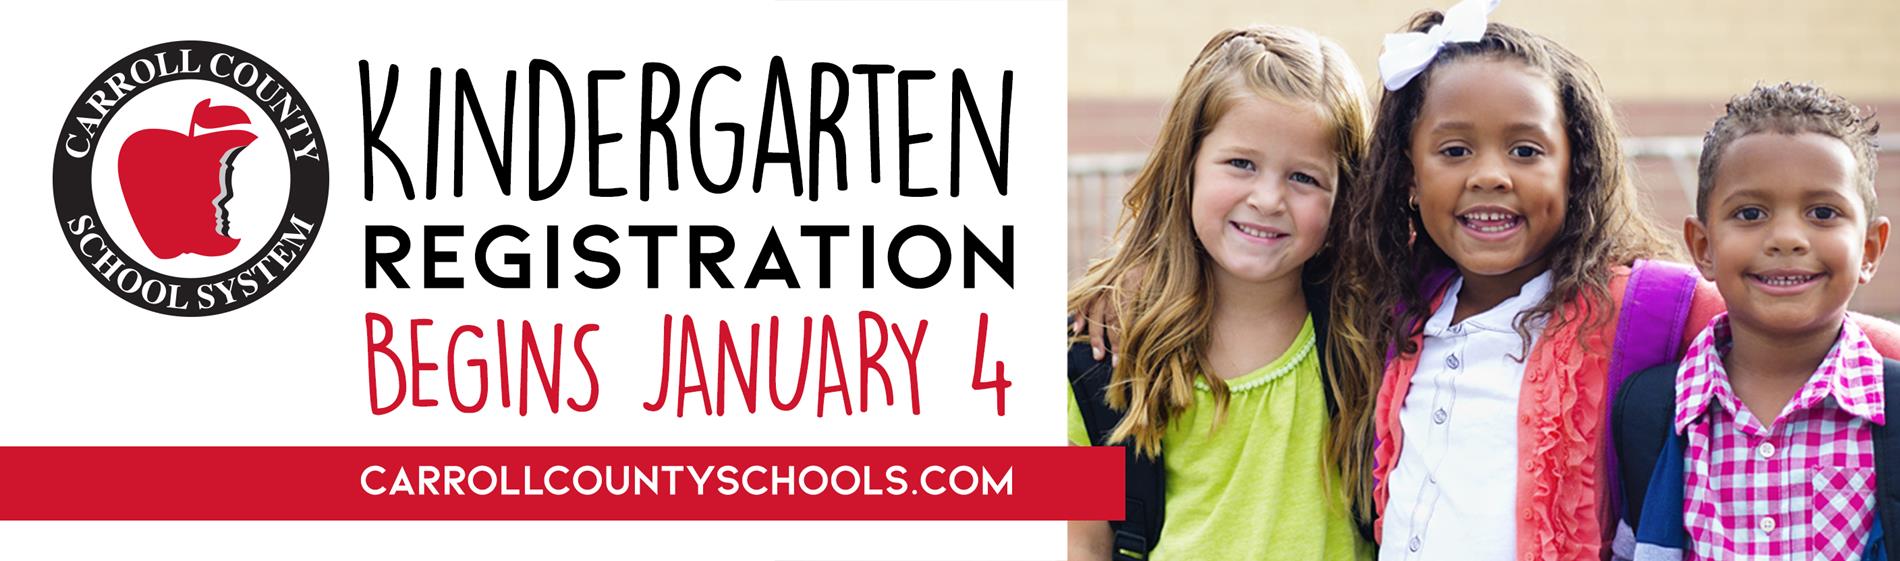 kindergarten registration beginning march 18th